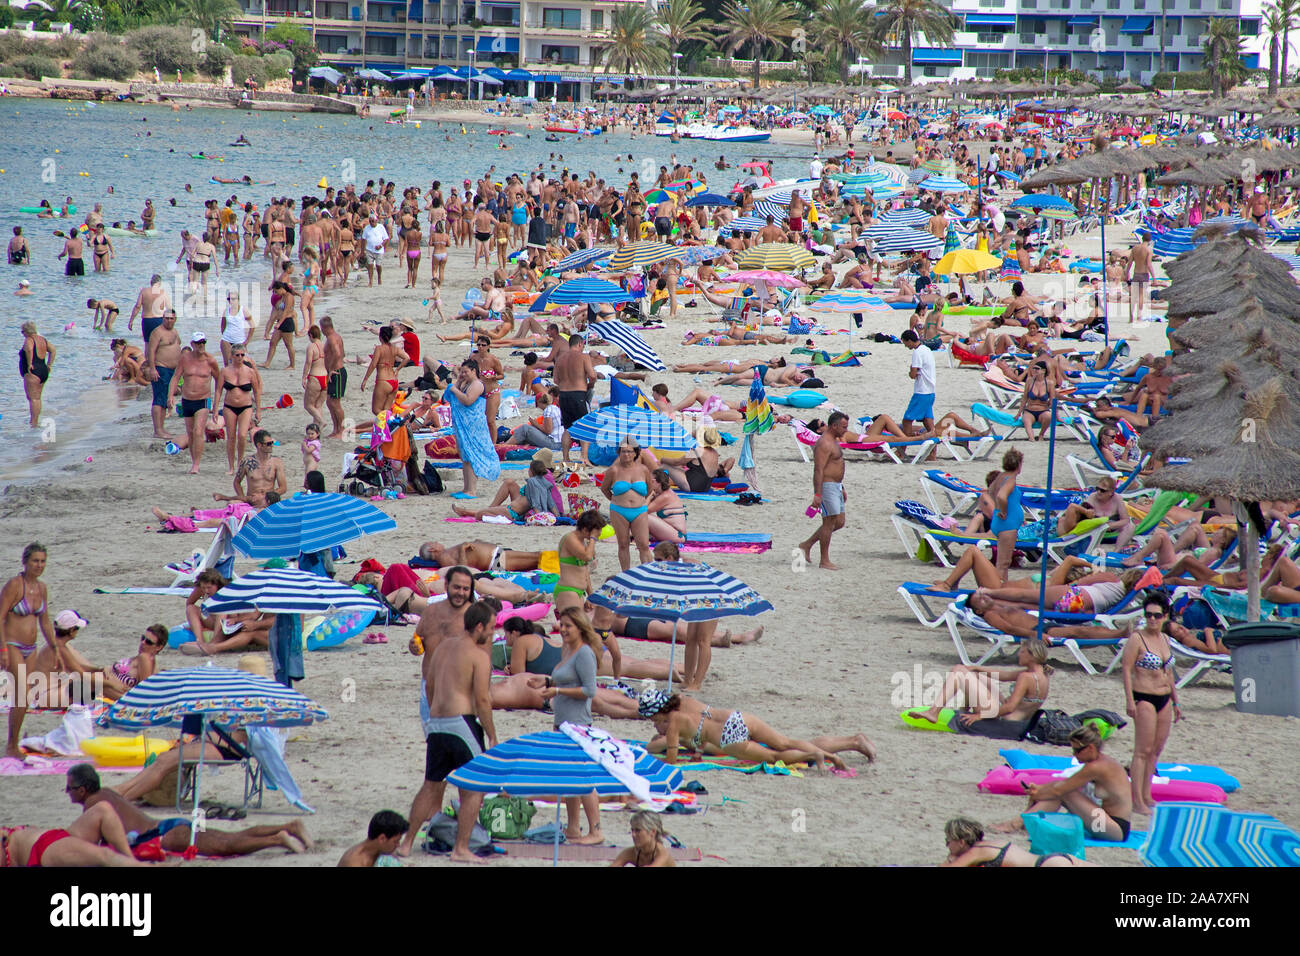 Overtourism. affollata spiaggia di Santa Ponca maiorca isole Baearic, Spagna Foto Stock